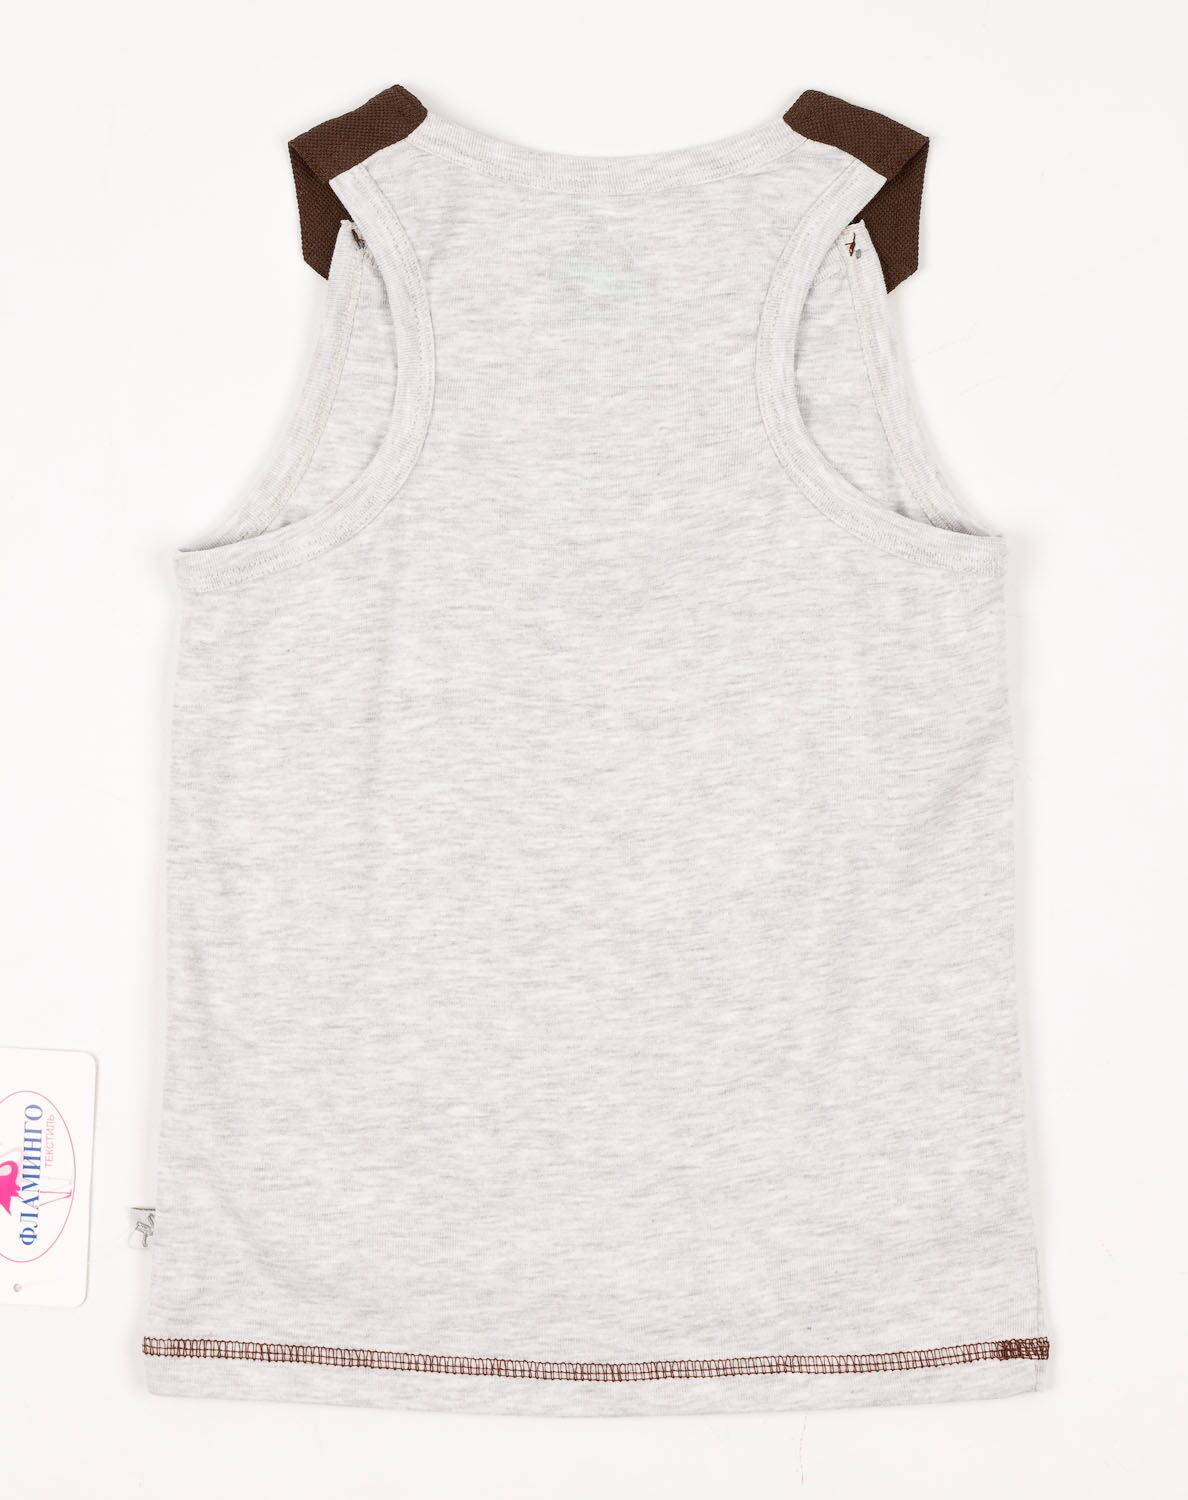 Комплект для мальчика (майка+шорты) Фламинго коричневый 911-1303 - картинка